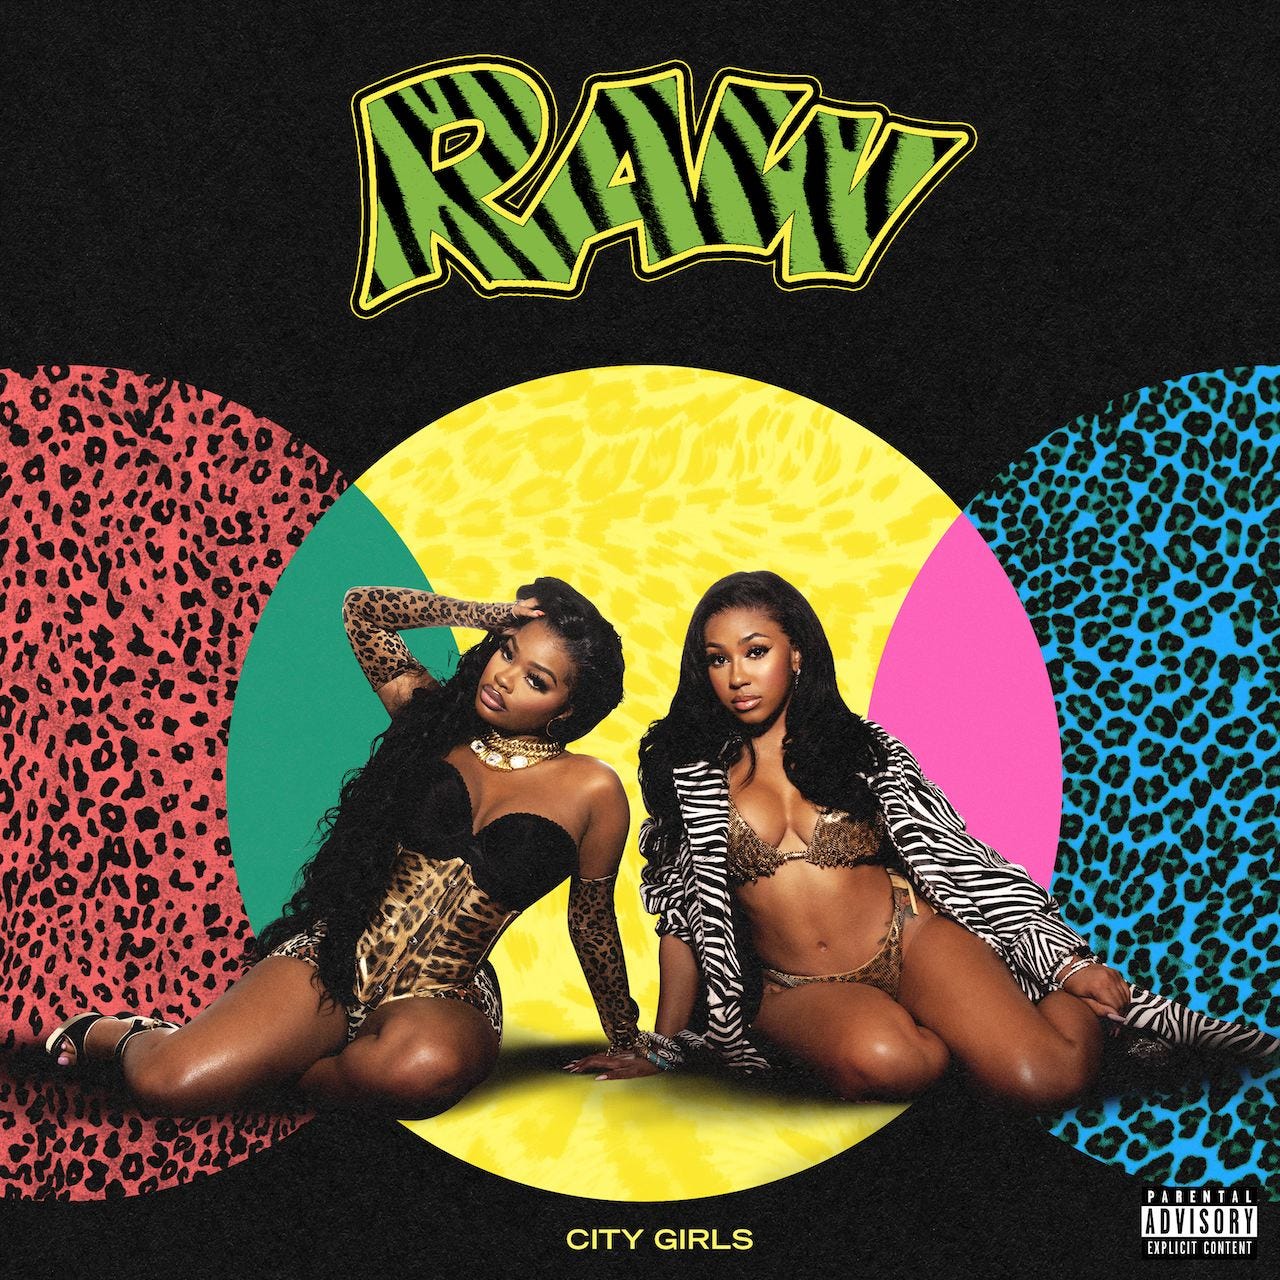 City Girls Announce New Album 'Raw,' Share Cover Art